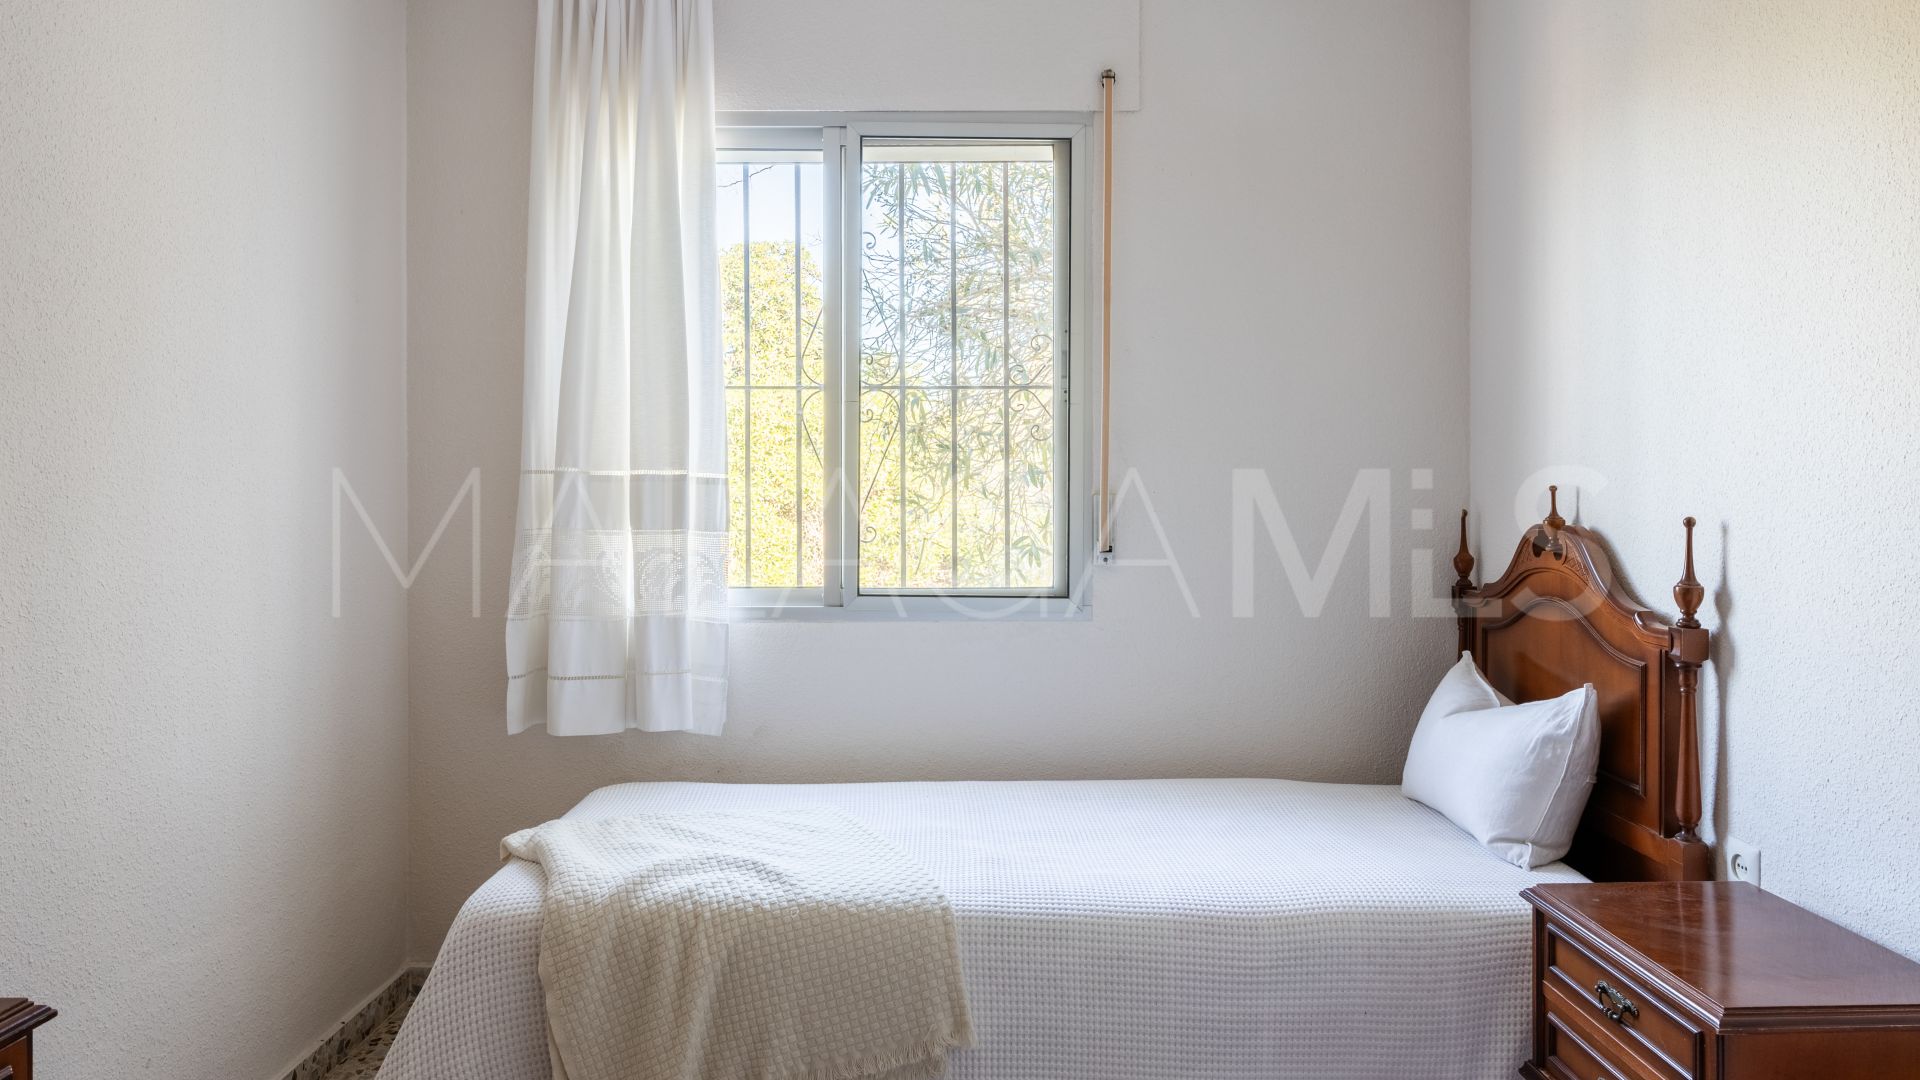 Finca for sale in Alhaurin de la Torre with 3 bedrooms